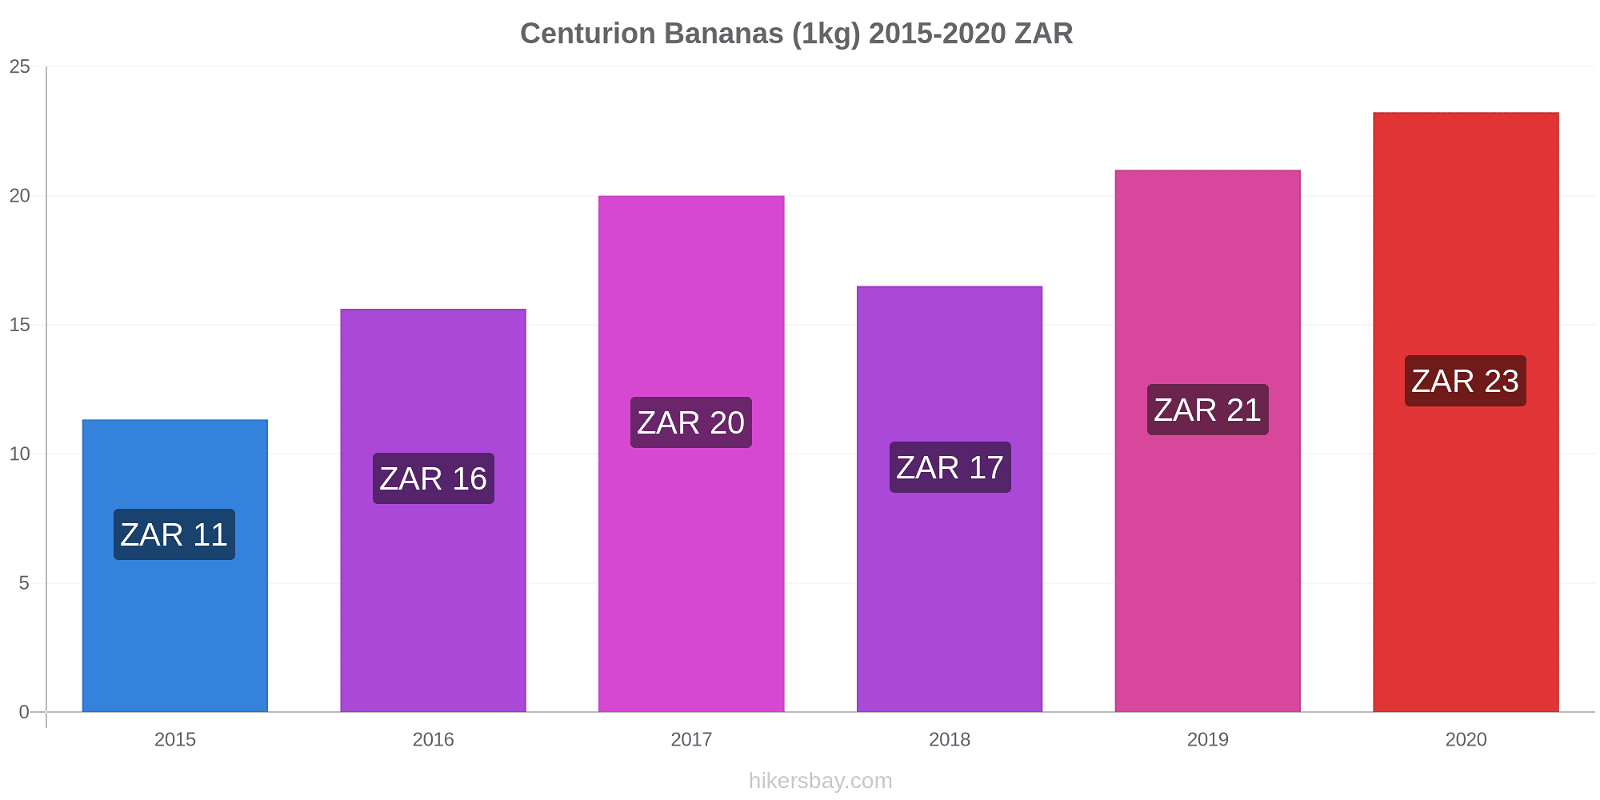 Centurion price changes Bananas (1kg) hikersbay.com